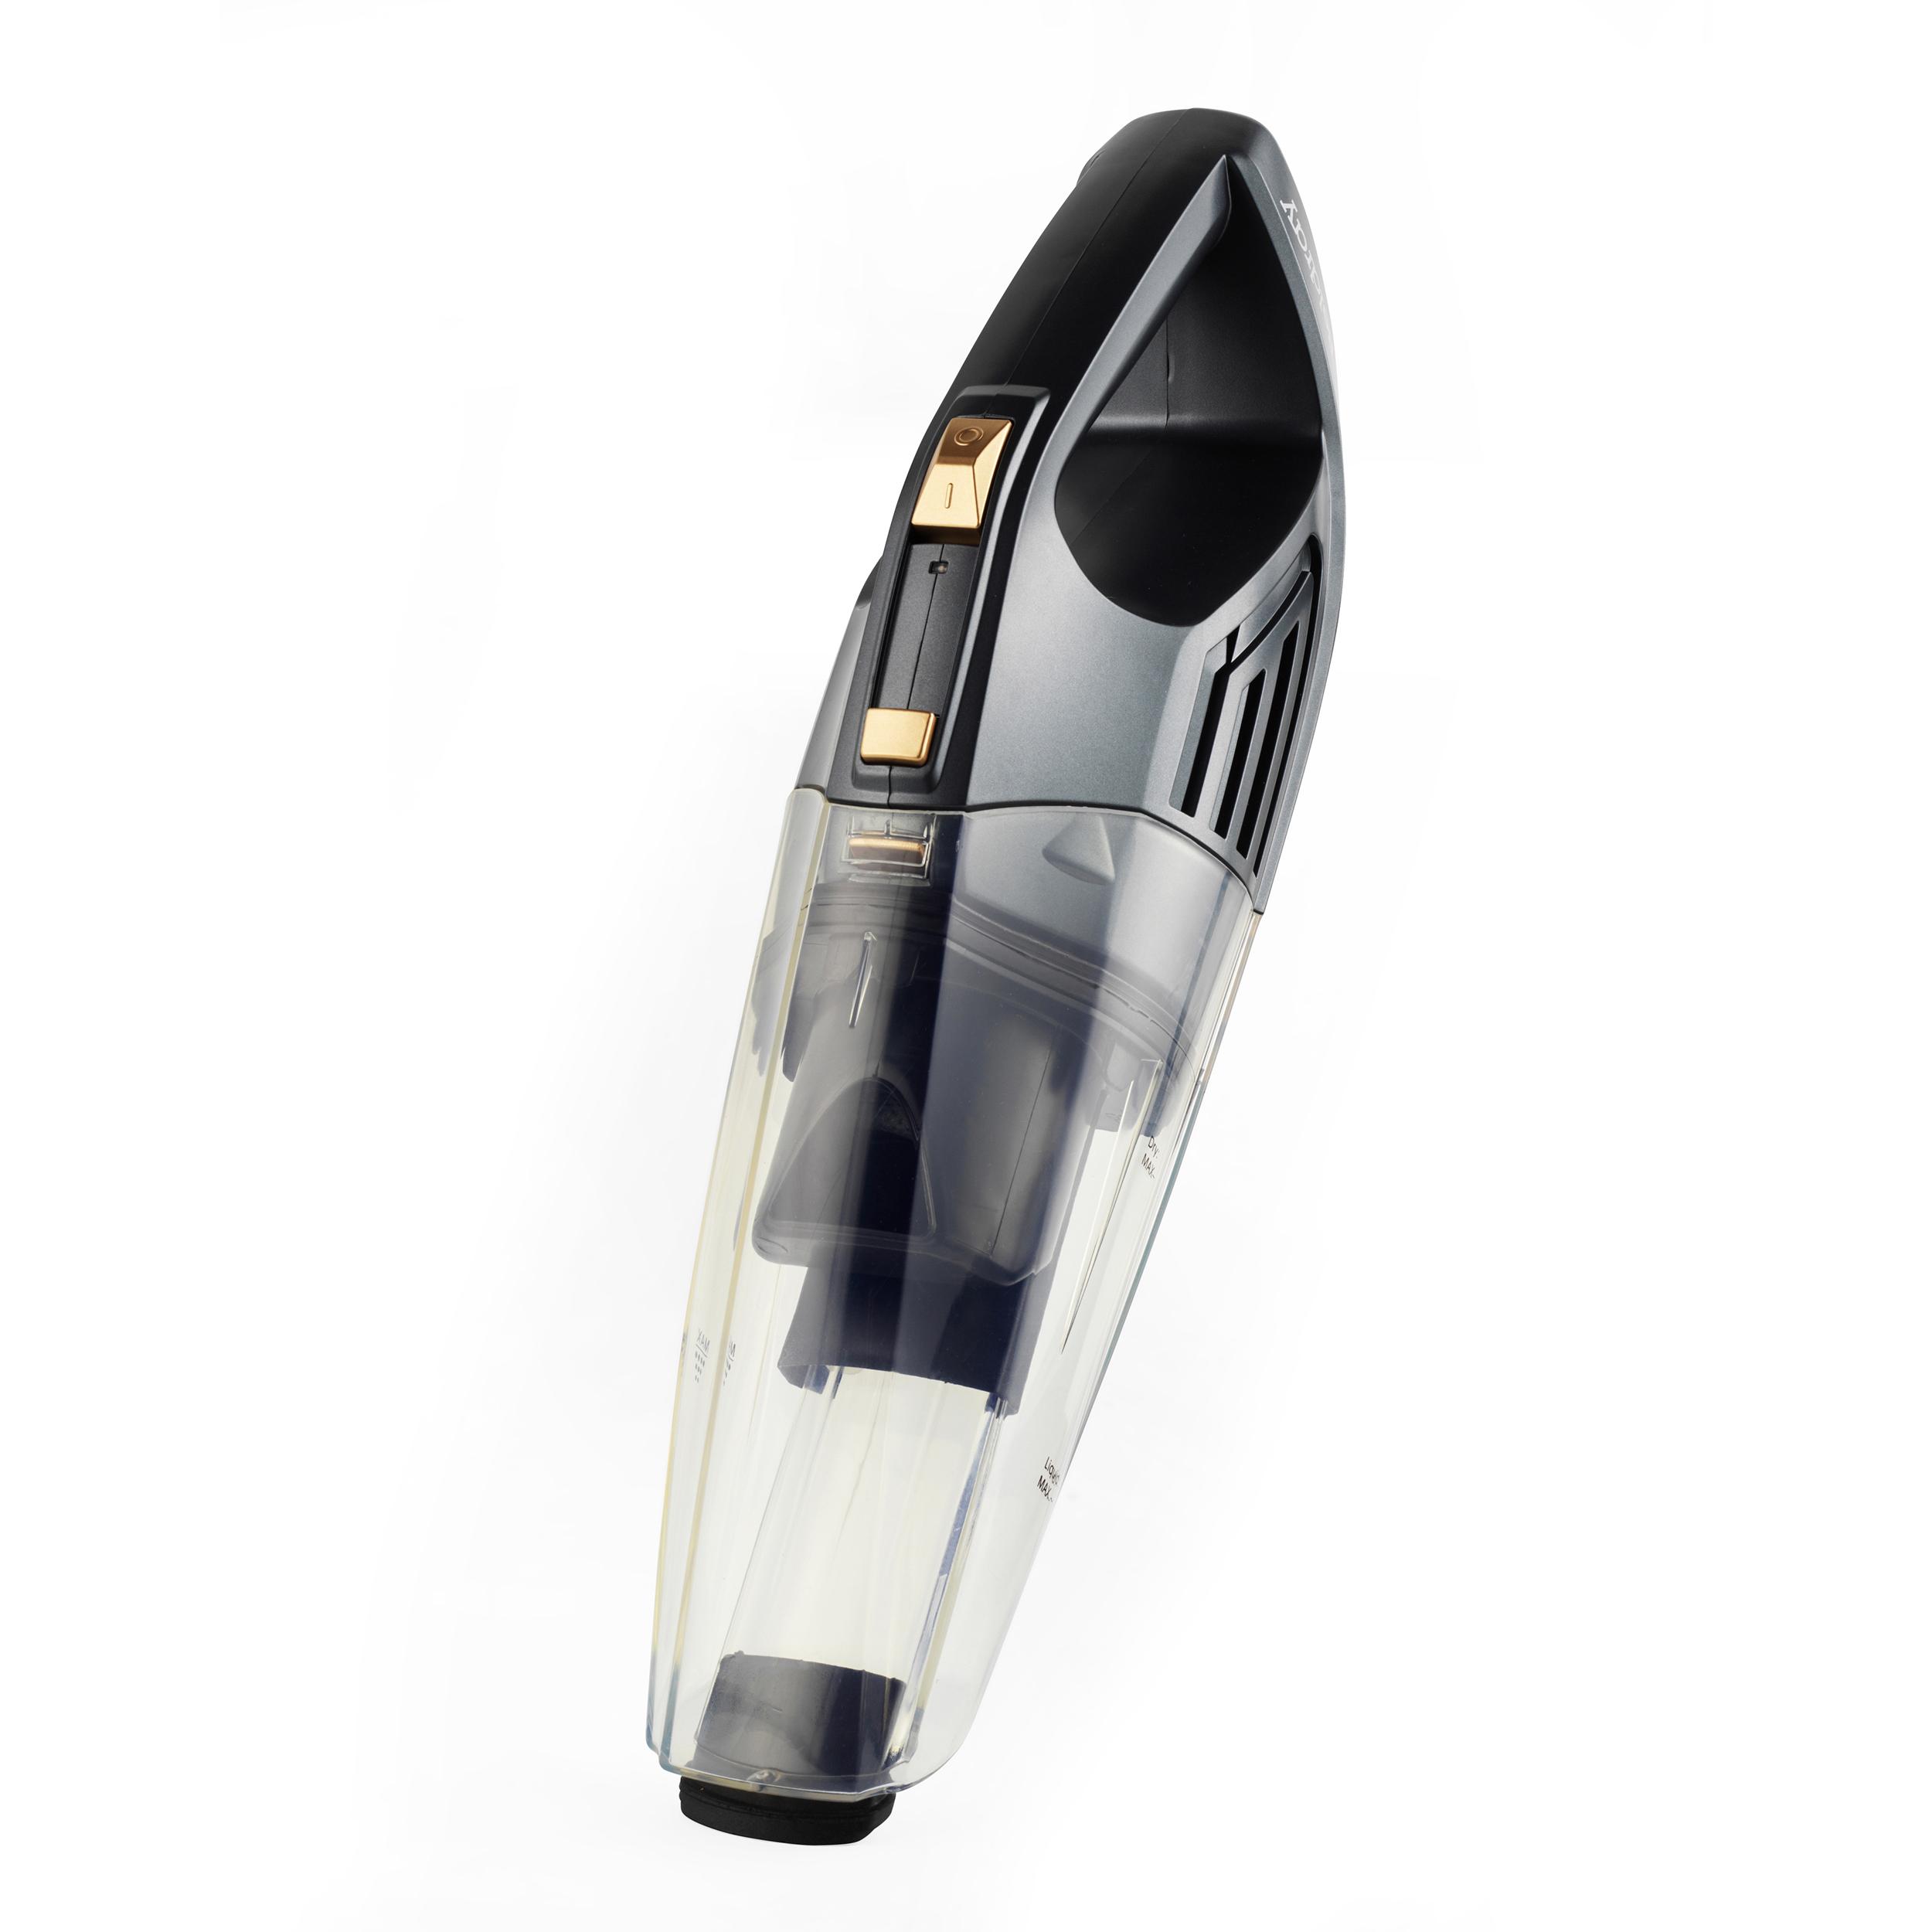 BELDRAY Wet & Dry BEL0676 Handheld Vacuum Cleaner - Dark Grey & Copper, Silver/Grey,Gold